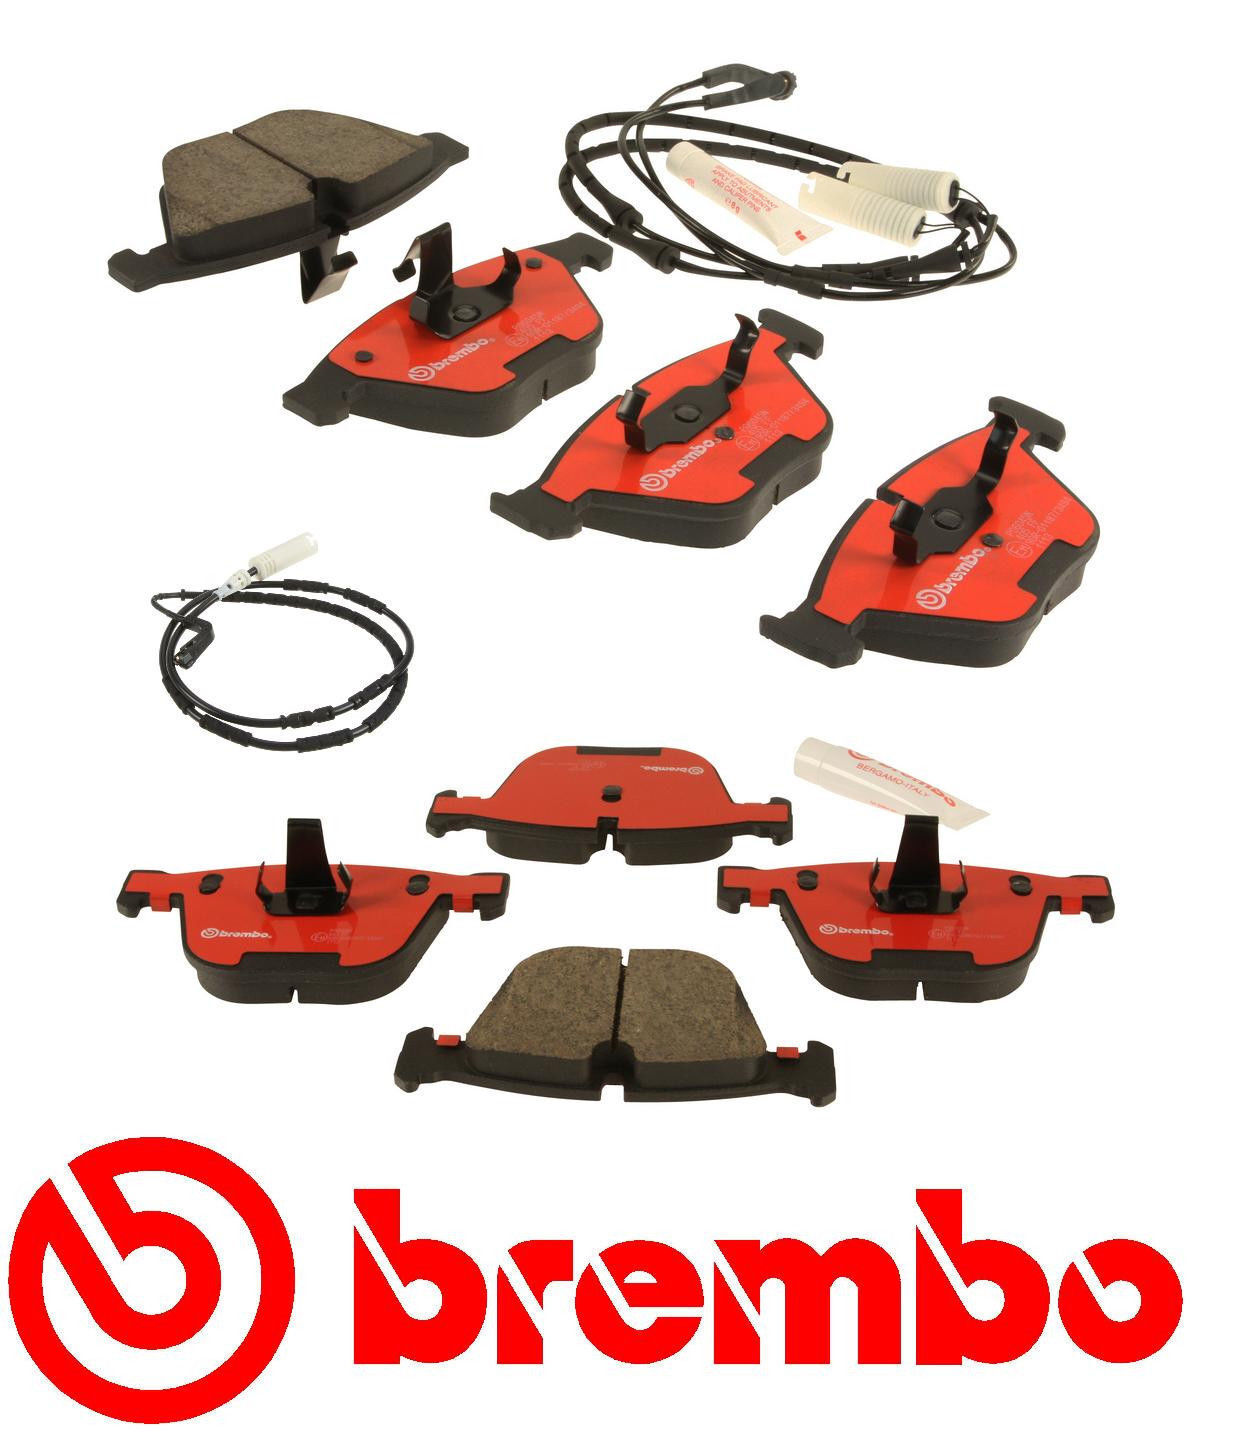 Brembo Front & Rear Ceramic Brake Pads Wear Sensors Set for BMW P06031N P06026N